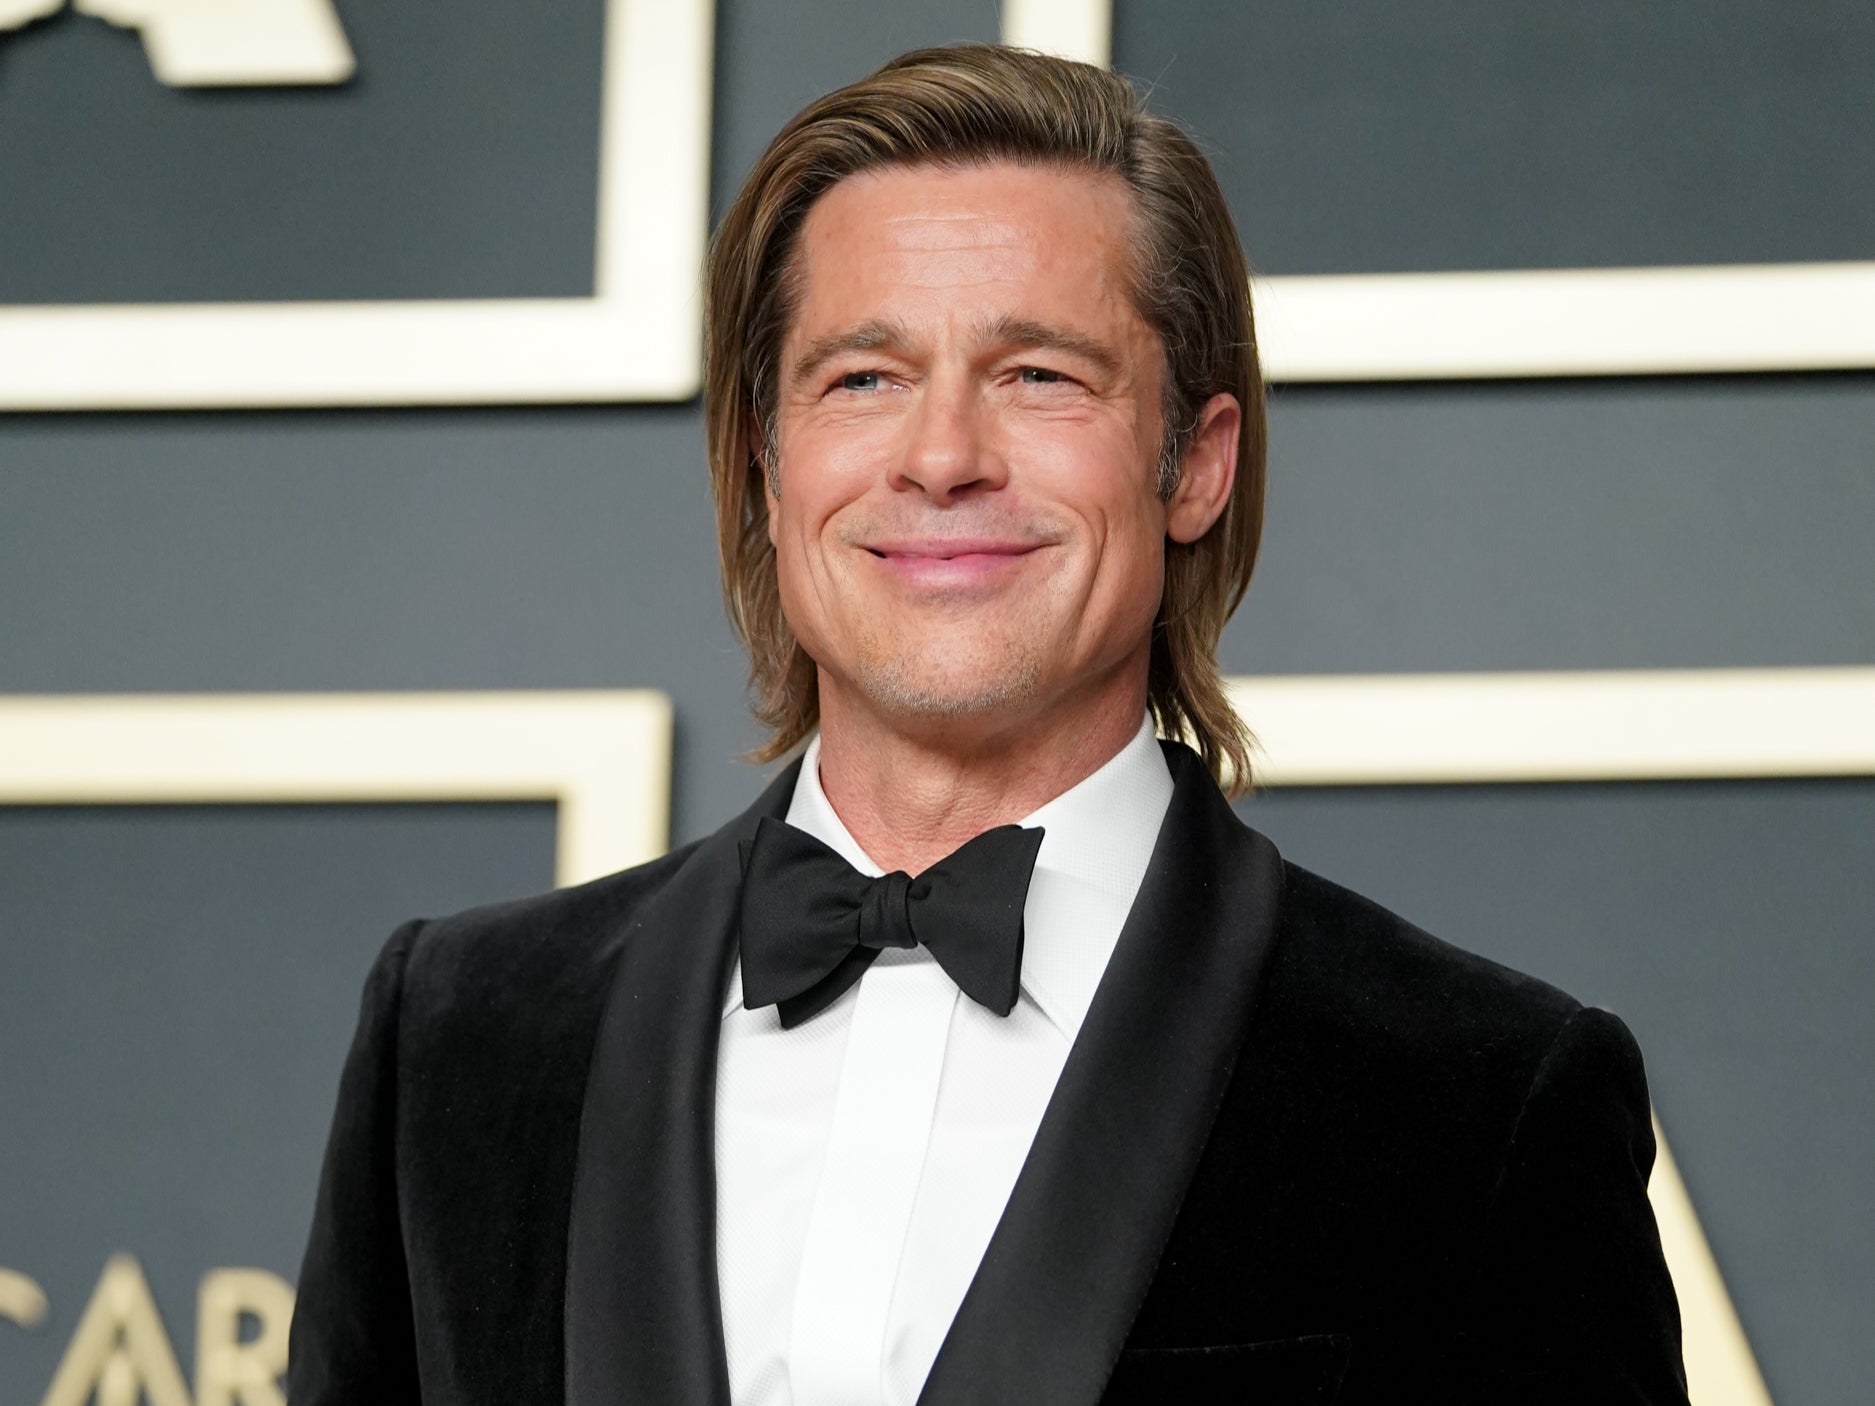 You Can Now Buy Brad Pitt's Tux